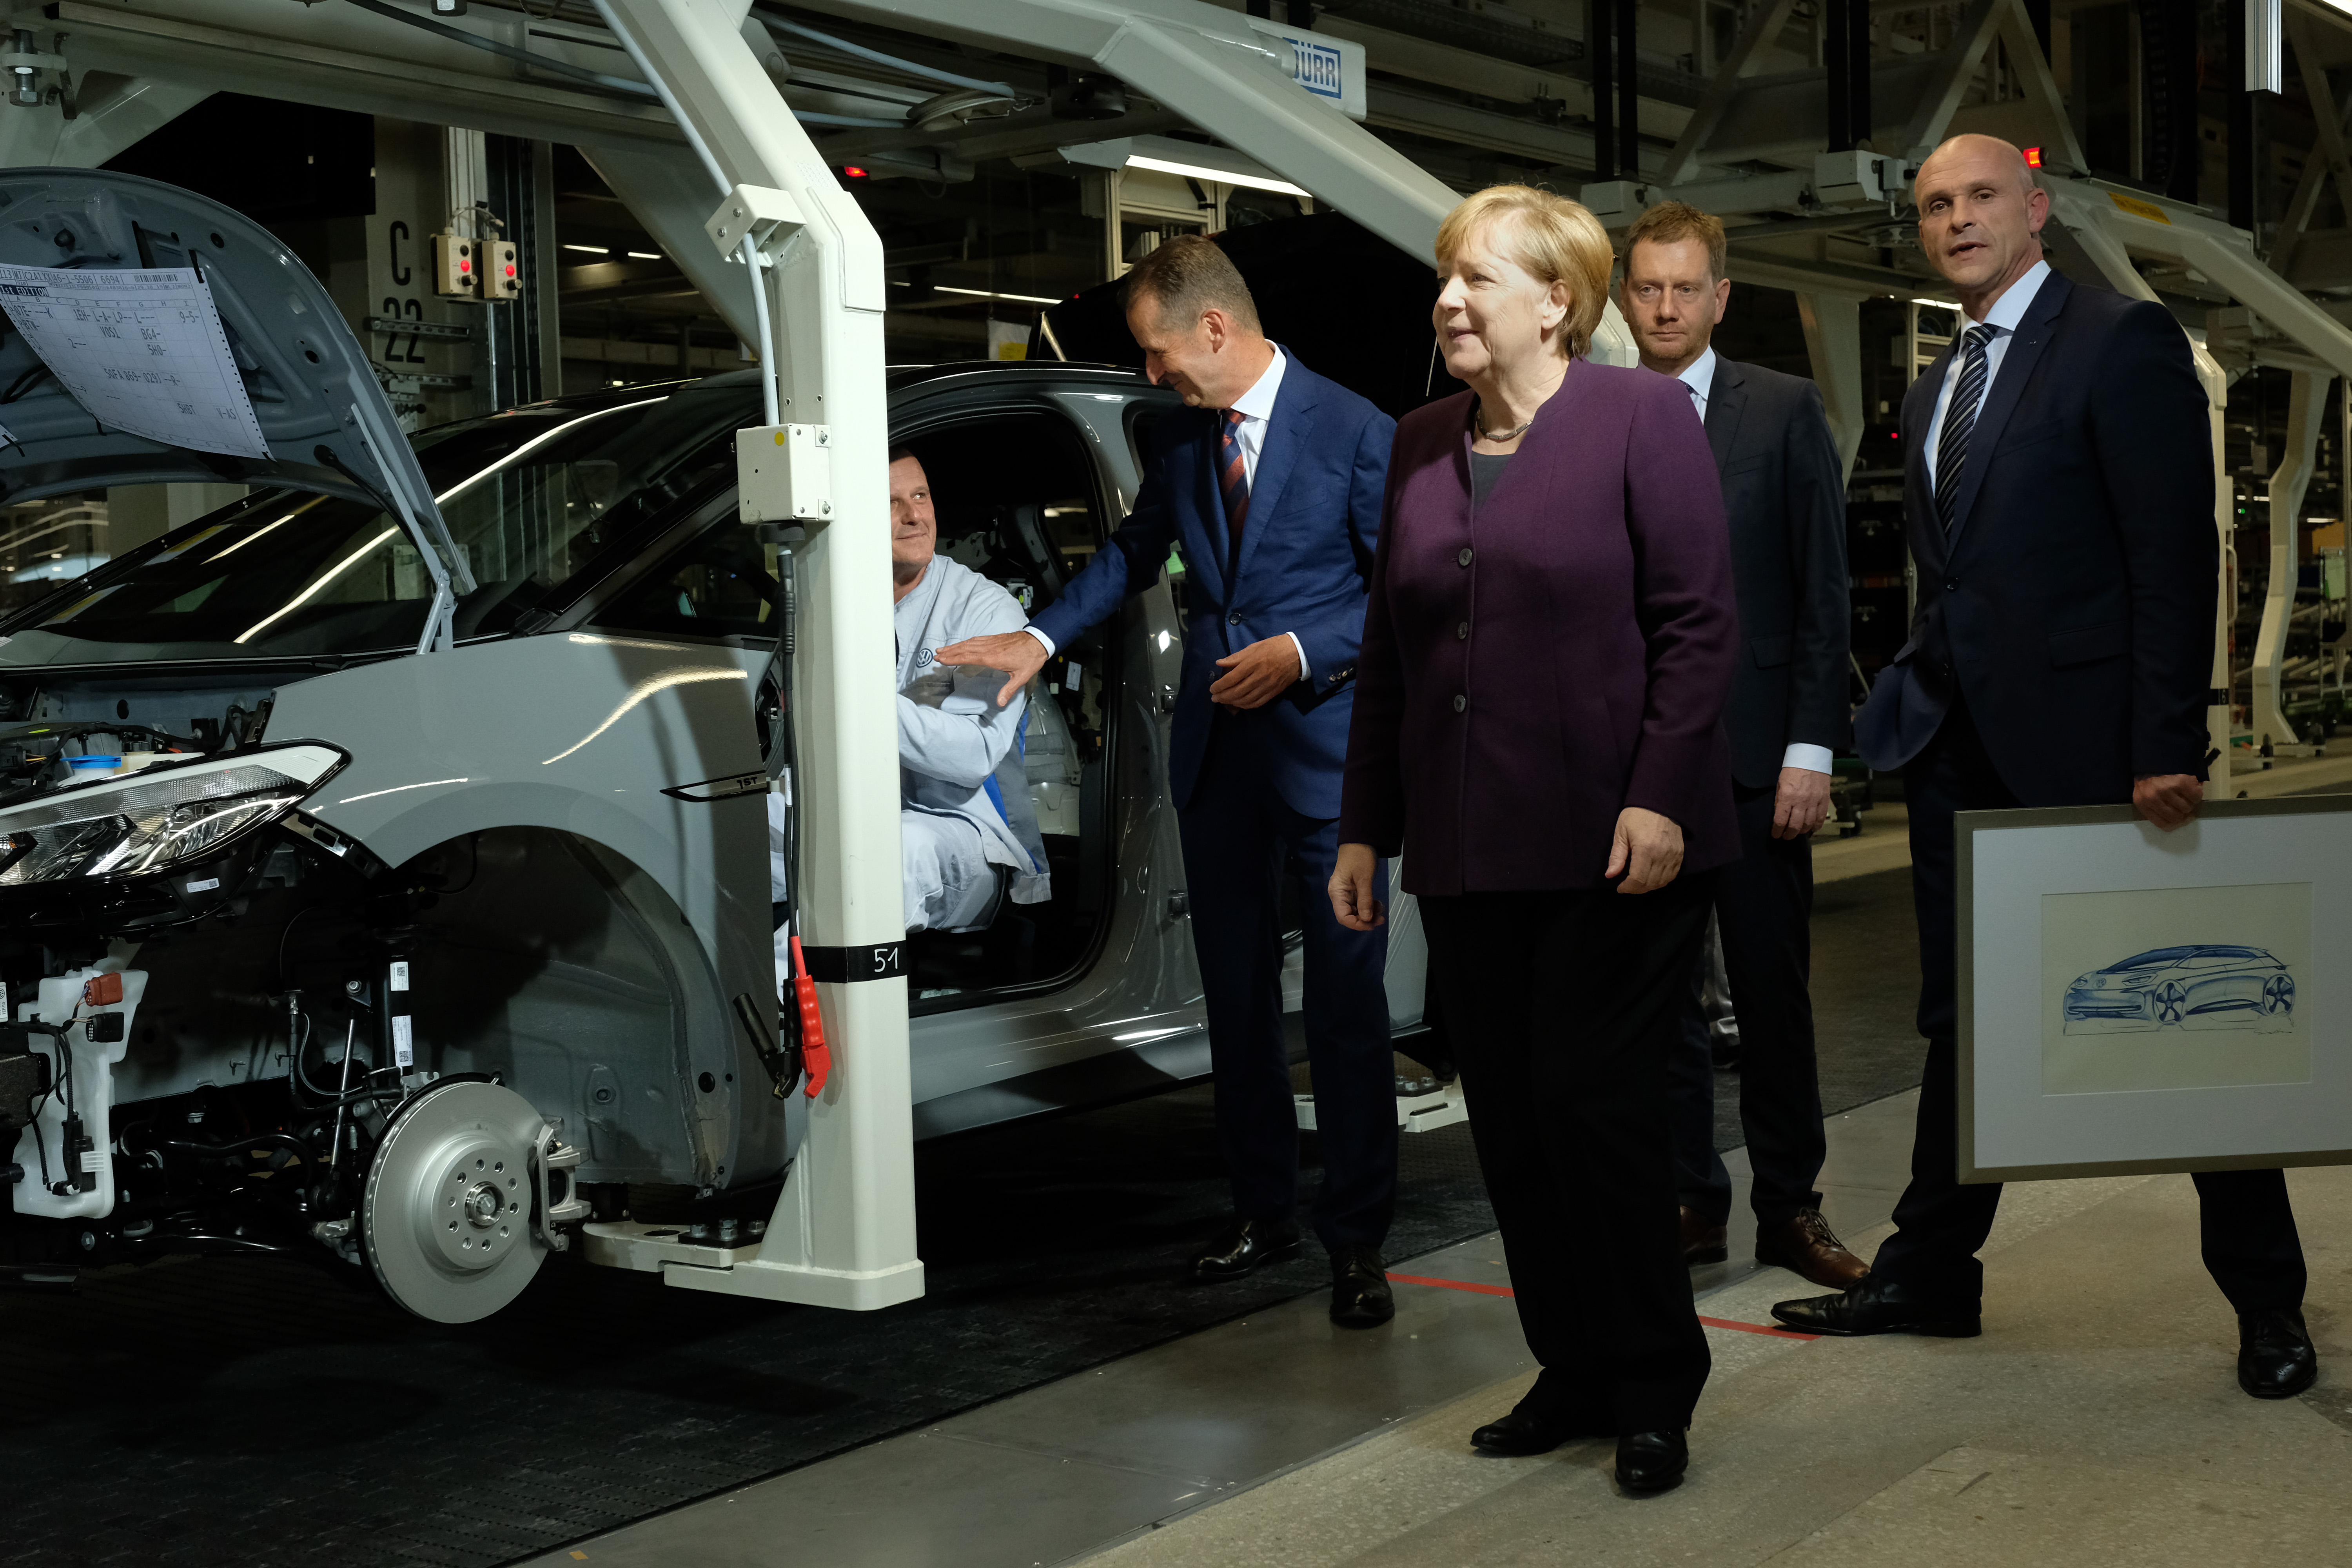 ZWICKAU, GERMANY - NOVEMBER 04: German Chancellor Angela Merkel (C) visits the assembly line of the new Volkswagen ID.3 electric car accompanied by Herbert Diess (L of Merkel), head of Volksw